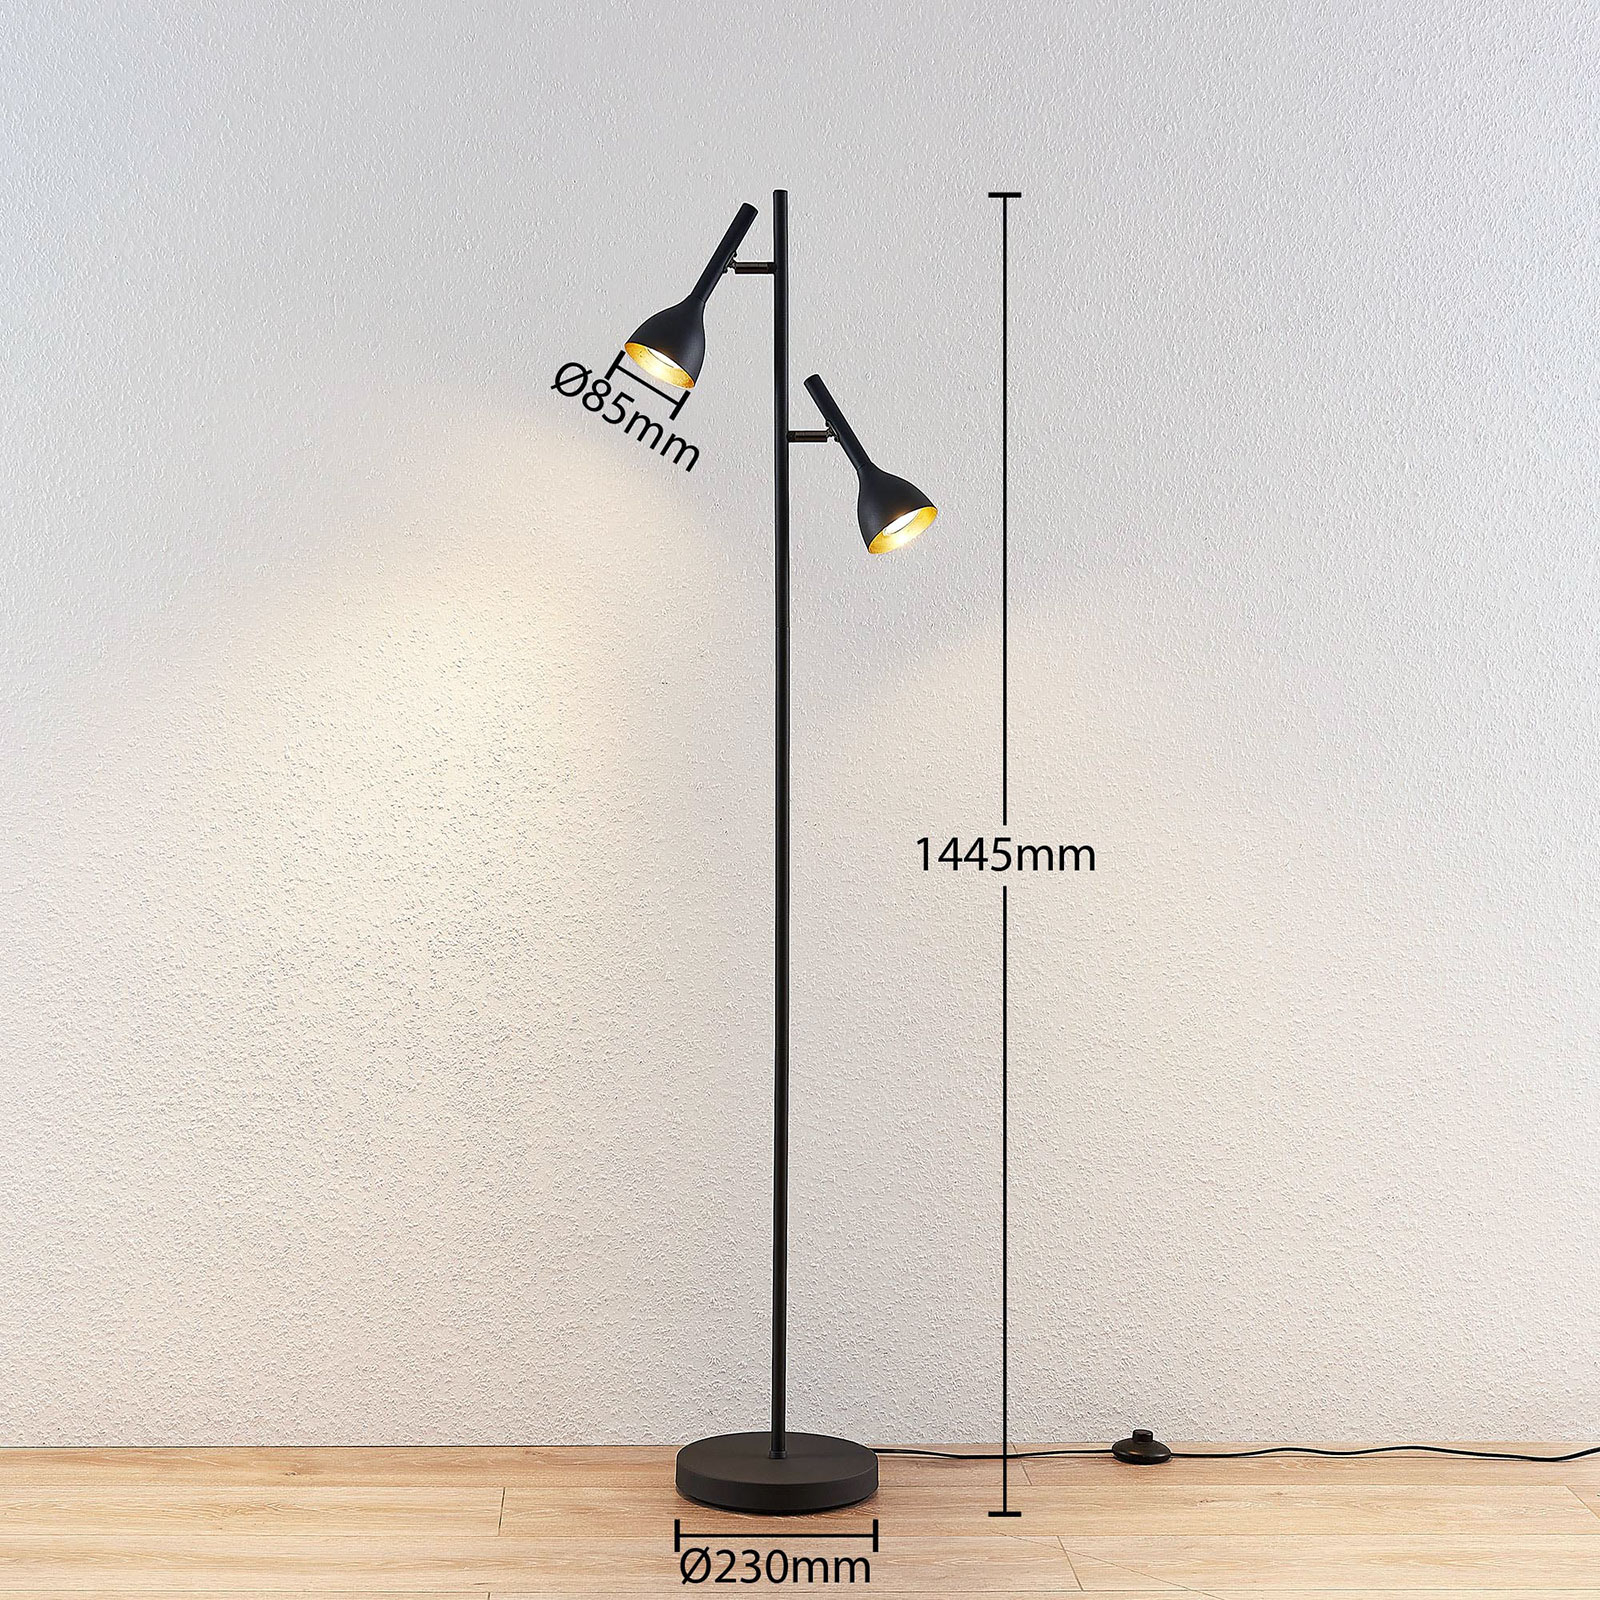 Vloerlamp Nordwin, 2 lampje, zwart-goud